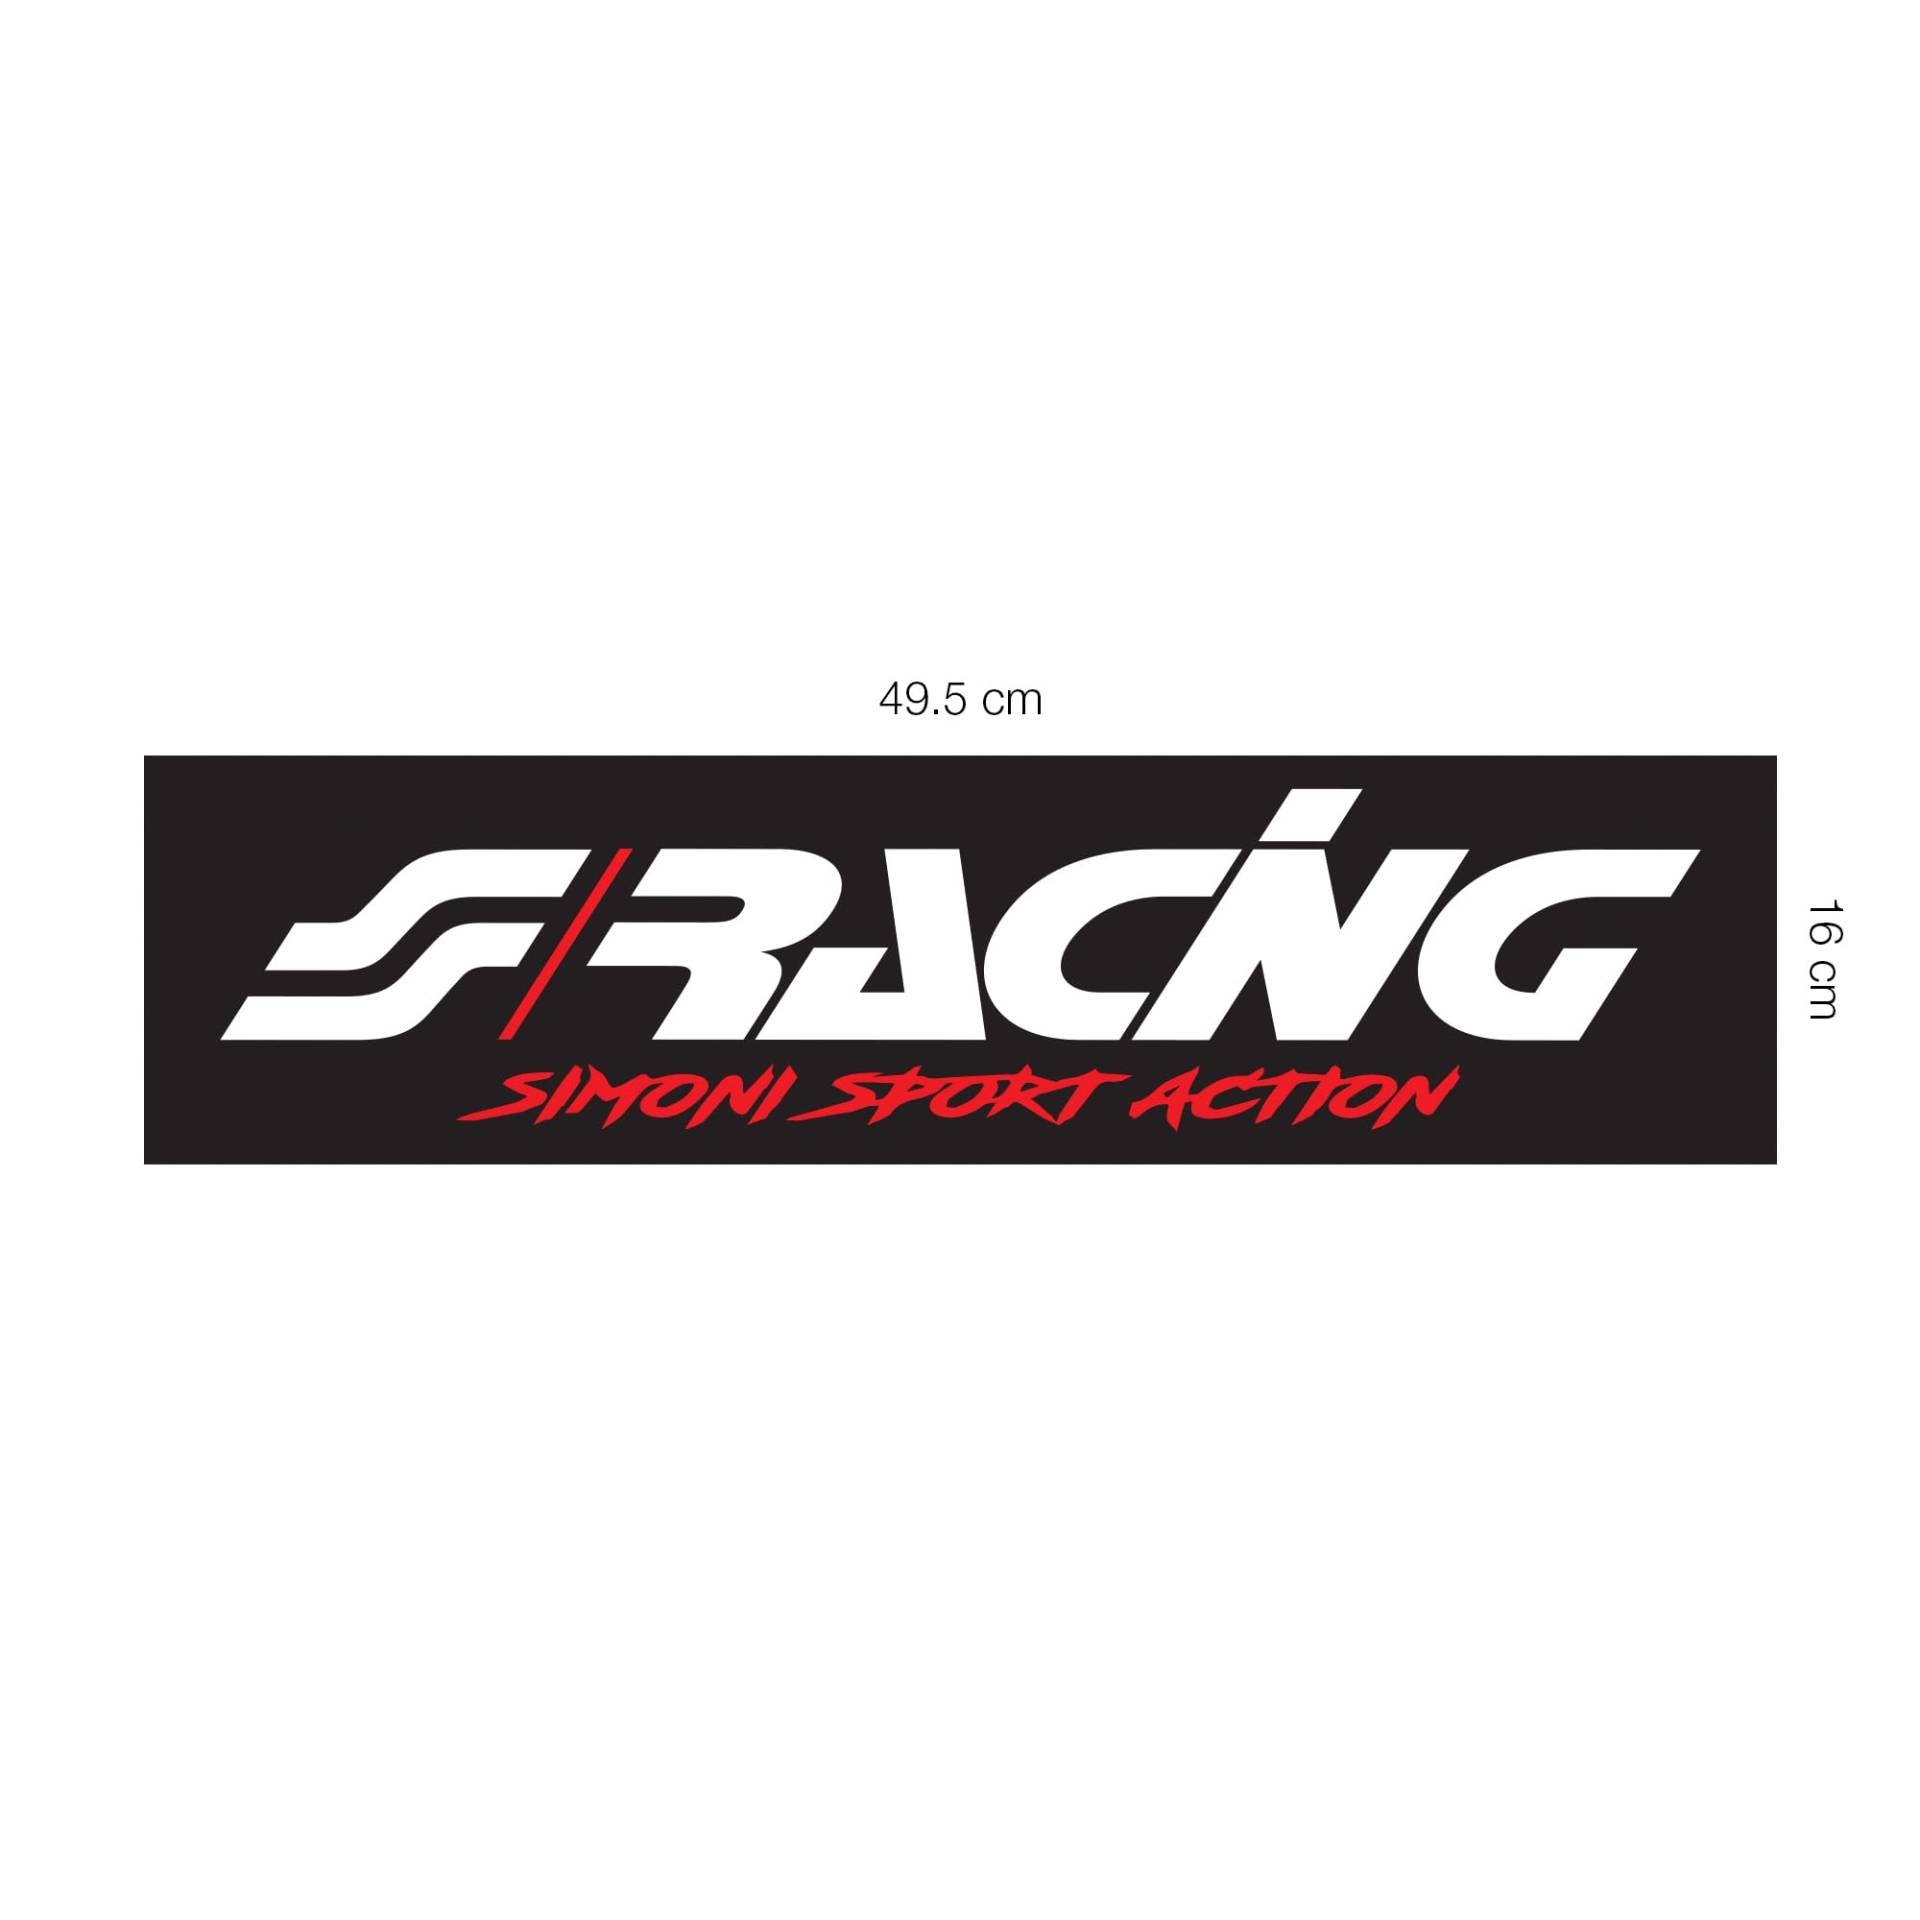 Simoni Racing CR/Big Logo Aufkleber 50 x 16 cm, Logo Weiß Hintergrund schwarz von Simoni Racing